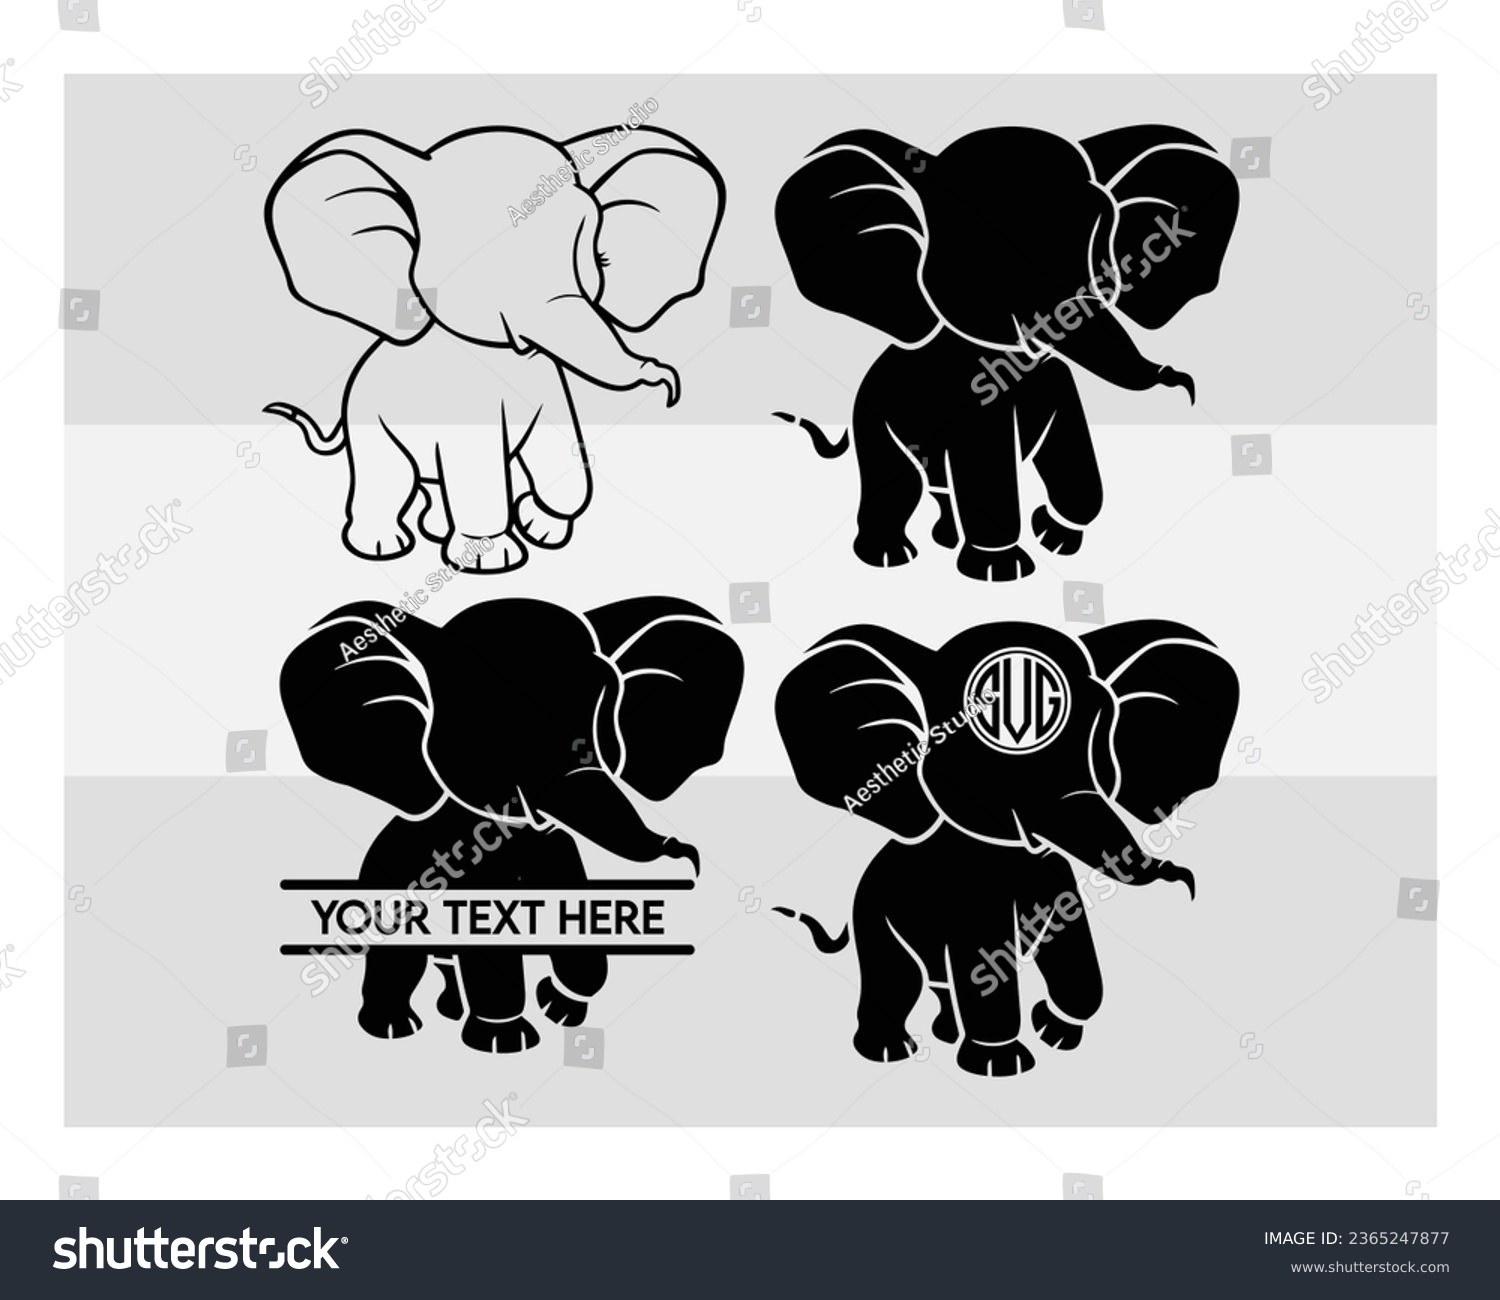 SVG of Baby Elephant Svg, Bundle, Baby Elephant Baby, Elephant Silhouette, Cute Elephant Svg, Animal Svg, Animal Silhouette, Clipart, Baby Shower, Vcetor, Outline, Eps svg